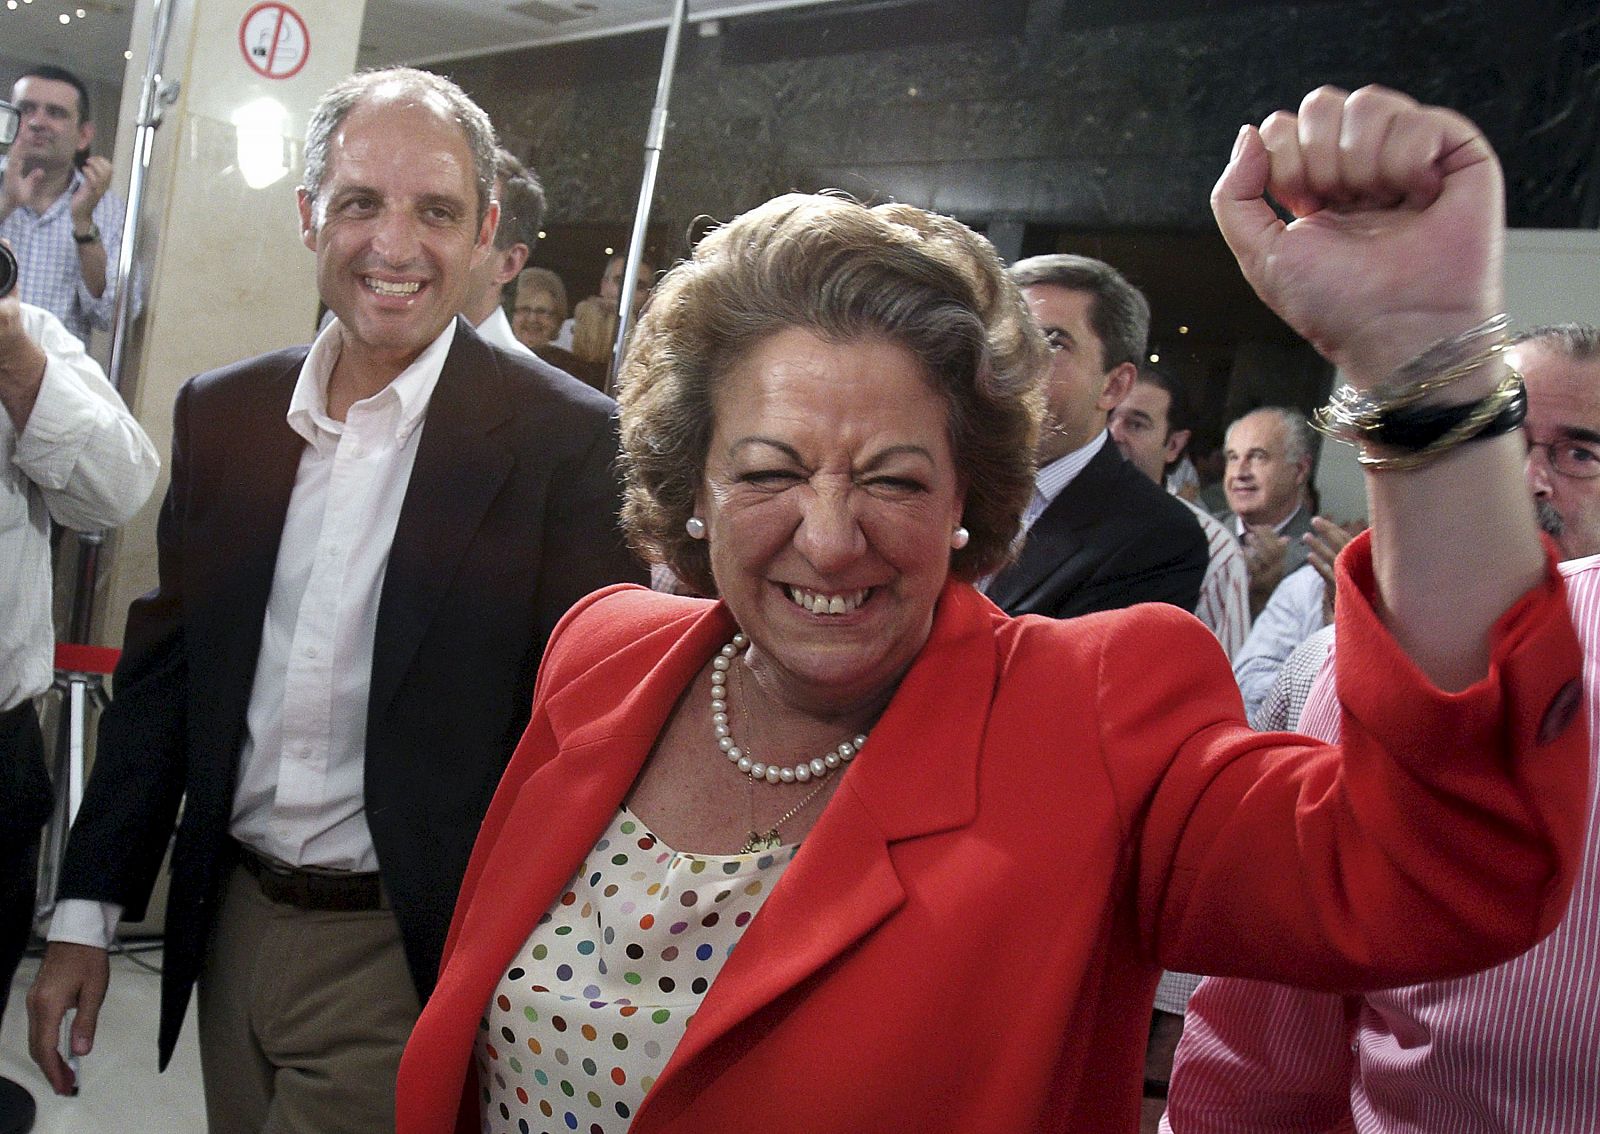 La alcaldesa de Valencia, Rita Barberá, acompañada por el president de la Generalitat, Francisco Camps